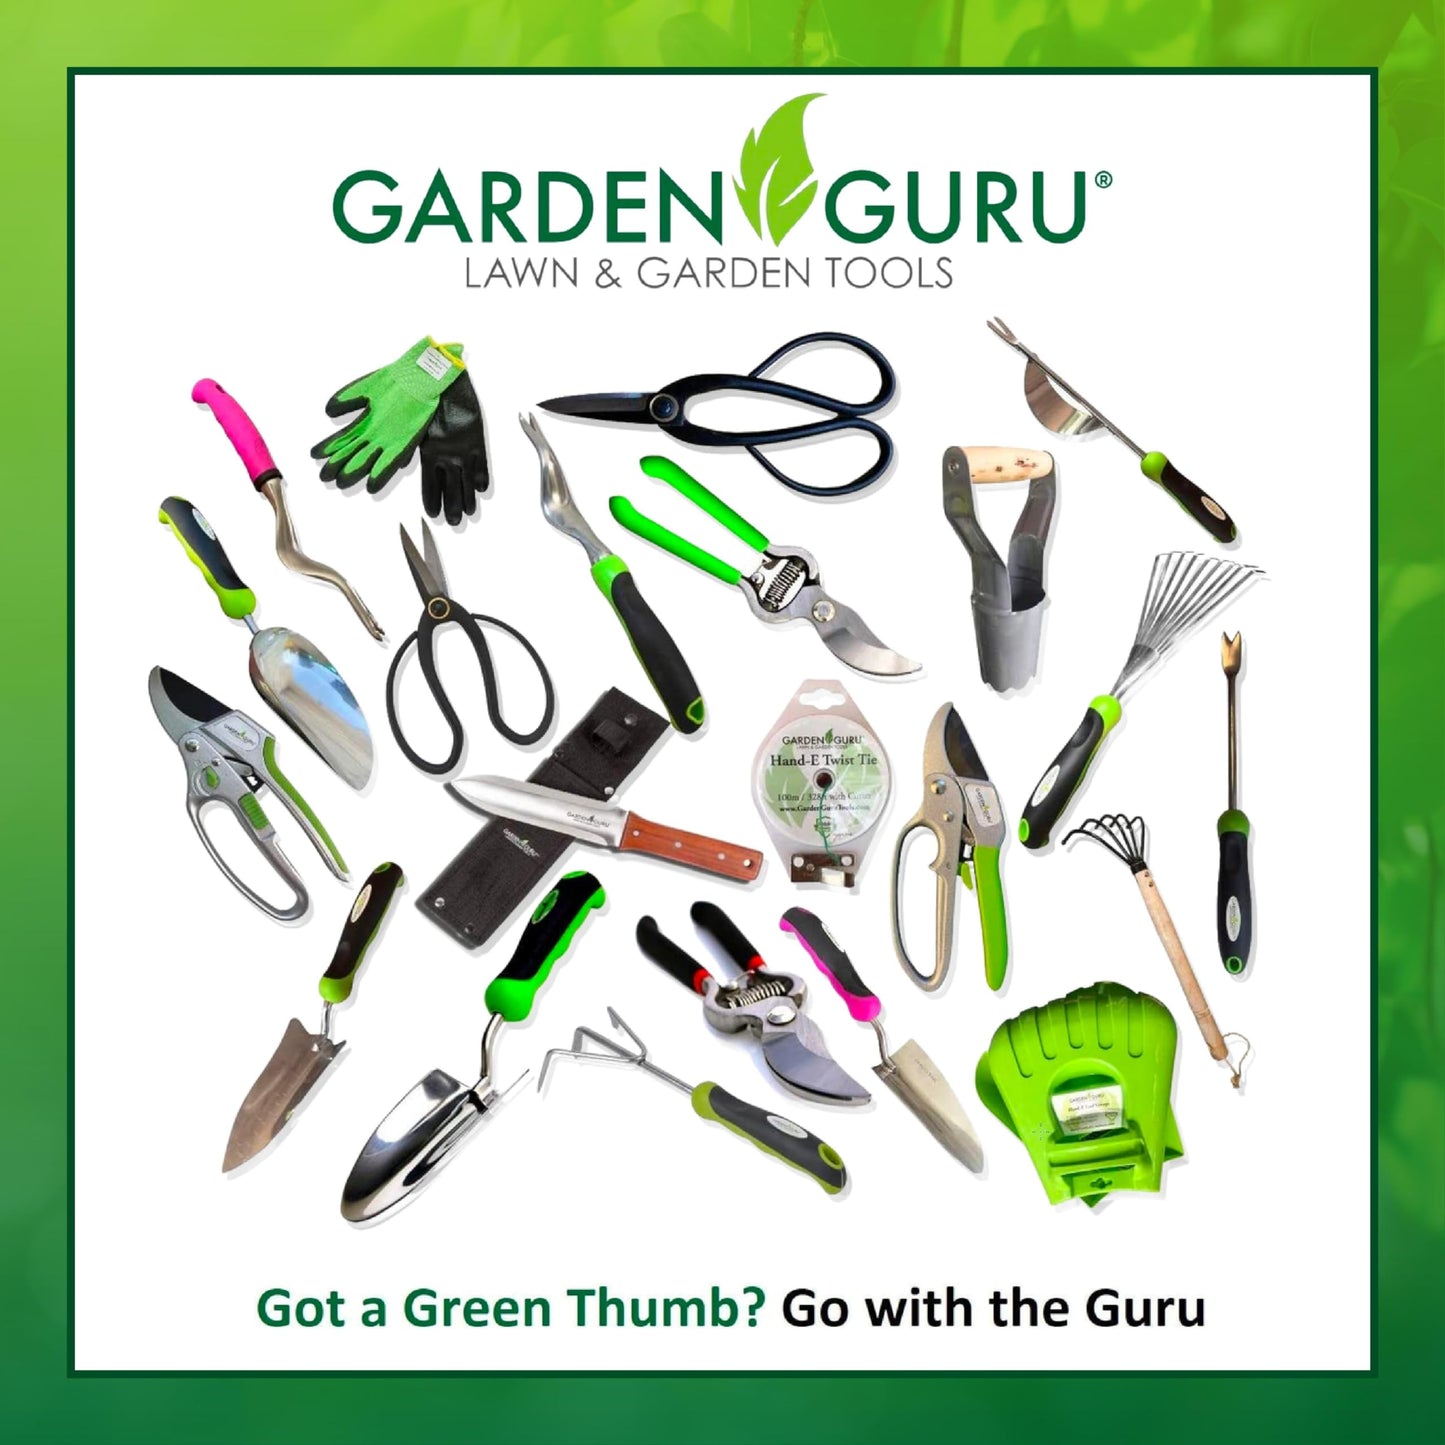 Garden Guru Hand Grass Clipper Scissors – Classic Forged Steel Grass Shears Pruners – Comfort Grip Handles – Perfect for Hand Edging Lawn, Trimming Shrubs & Flowers, Gardening, Landscaping